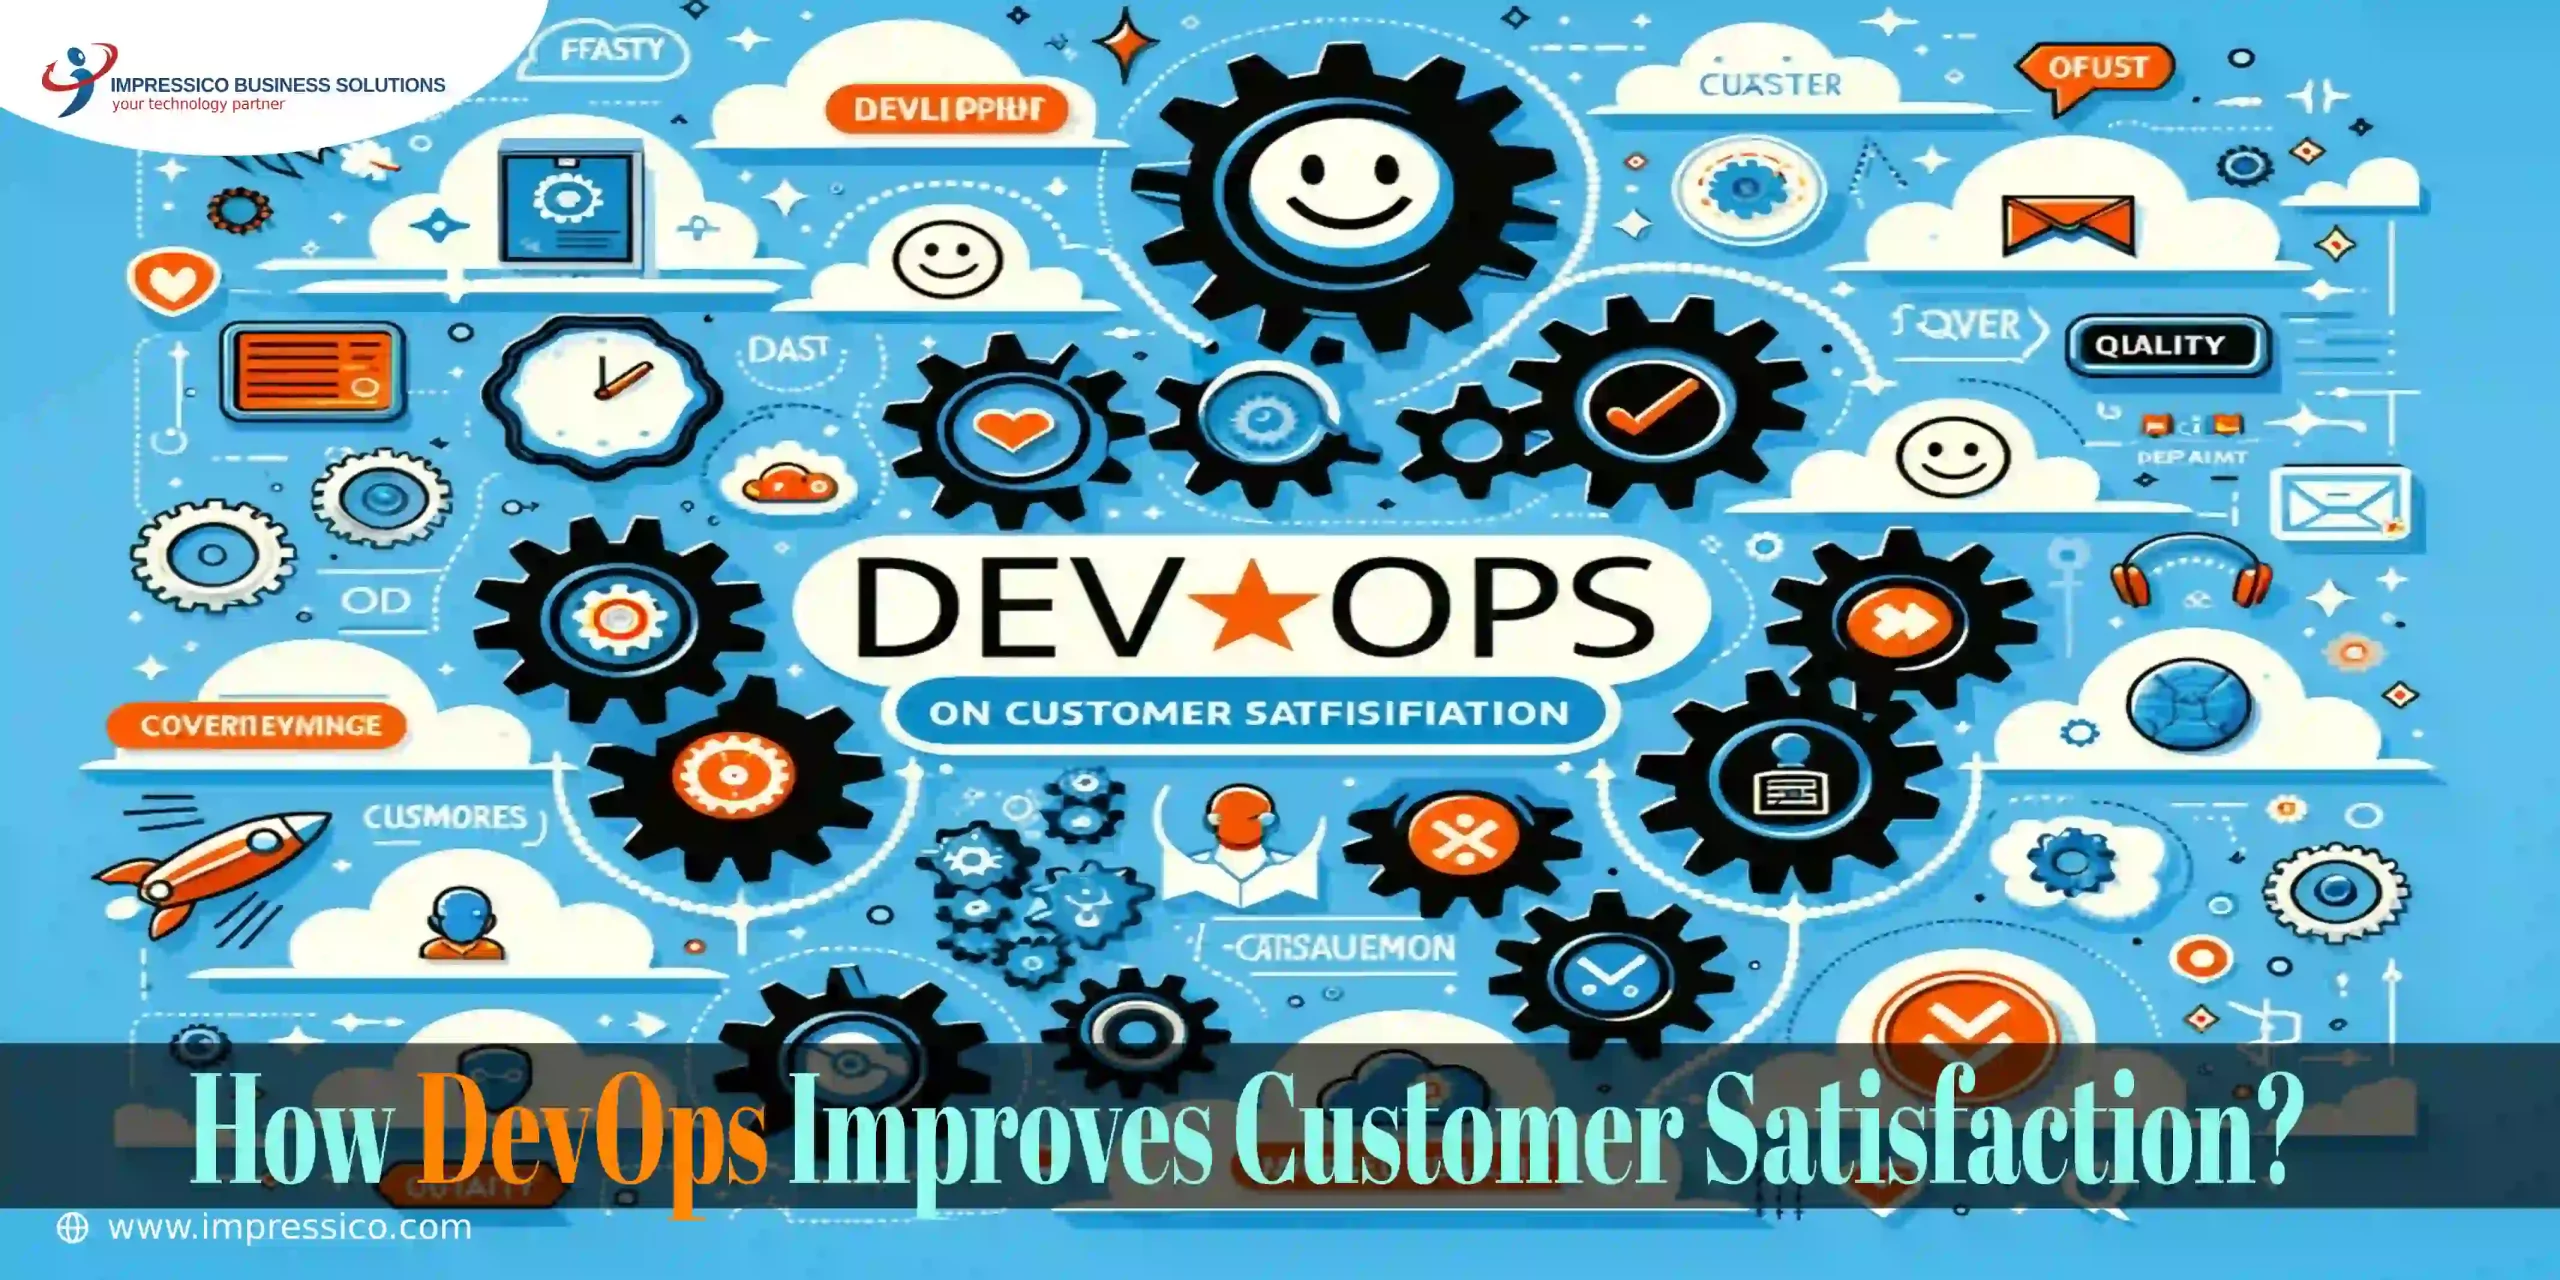 DevOps Improves Customer Satisfaction